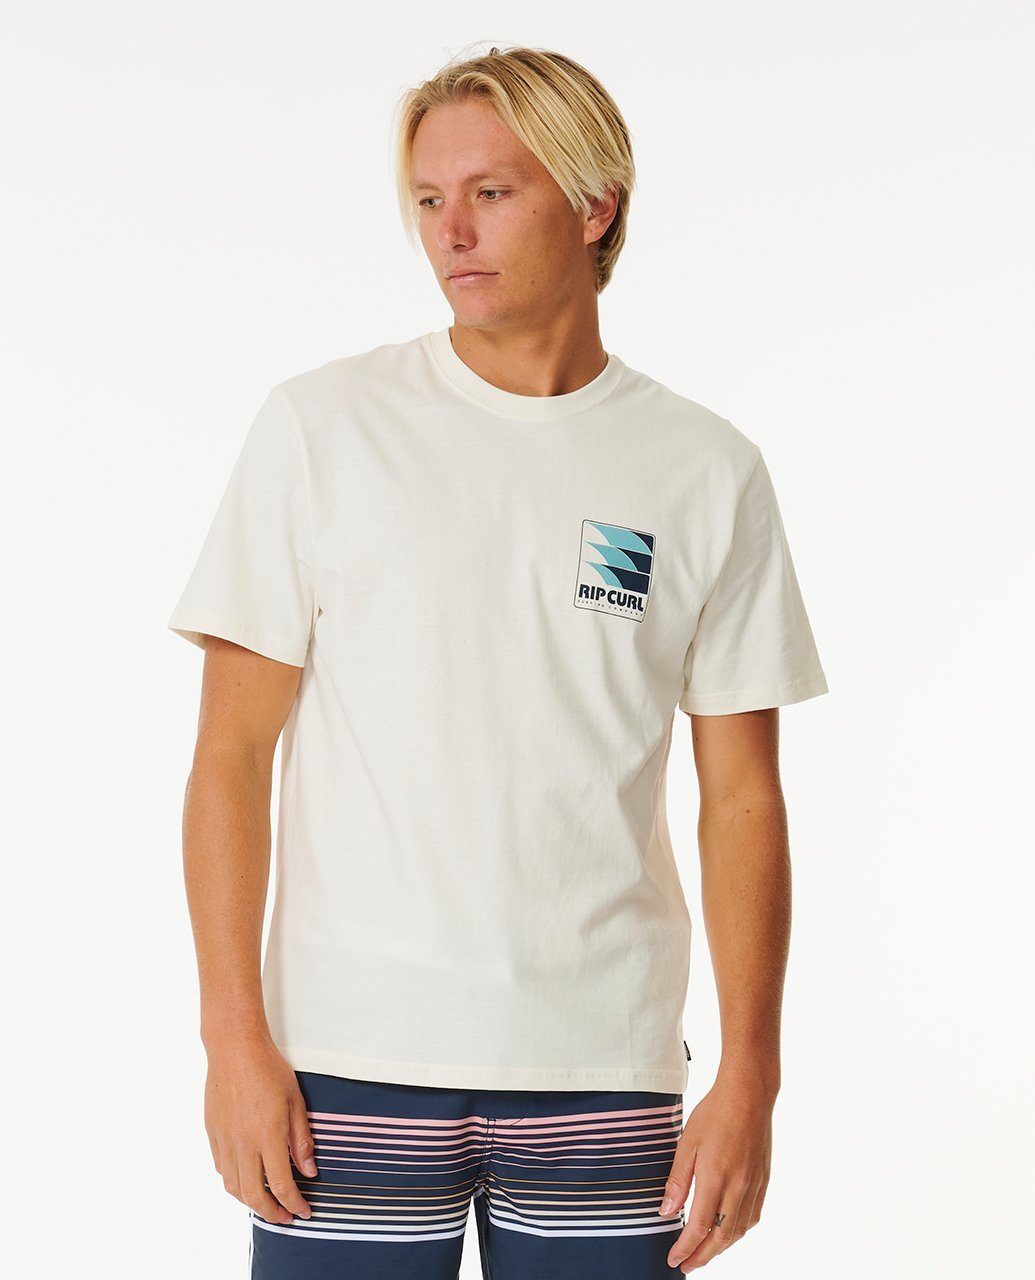 Curl Print-Shirt bone T-Shirt Surf Line Rip Kurzärmeliges Revival Up